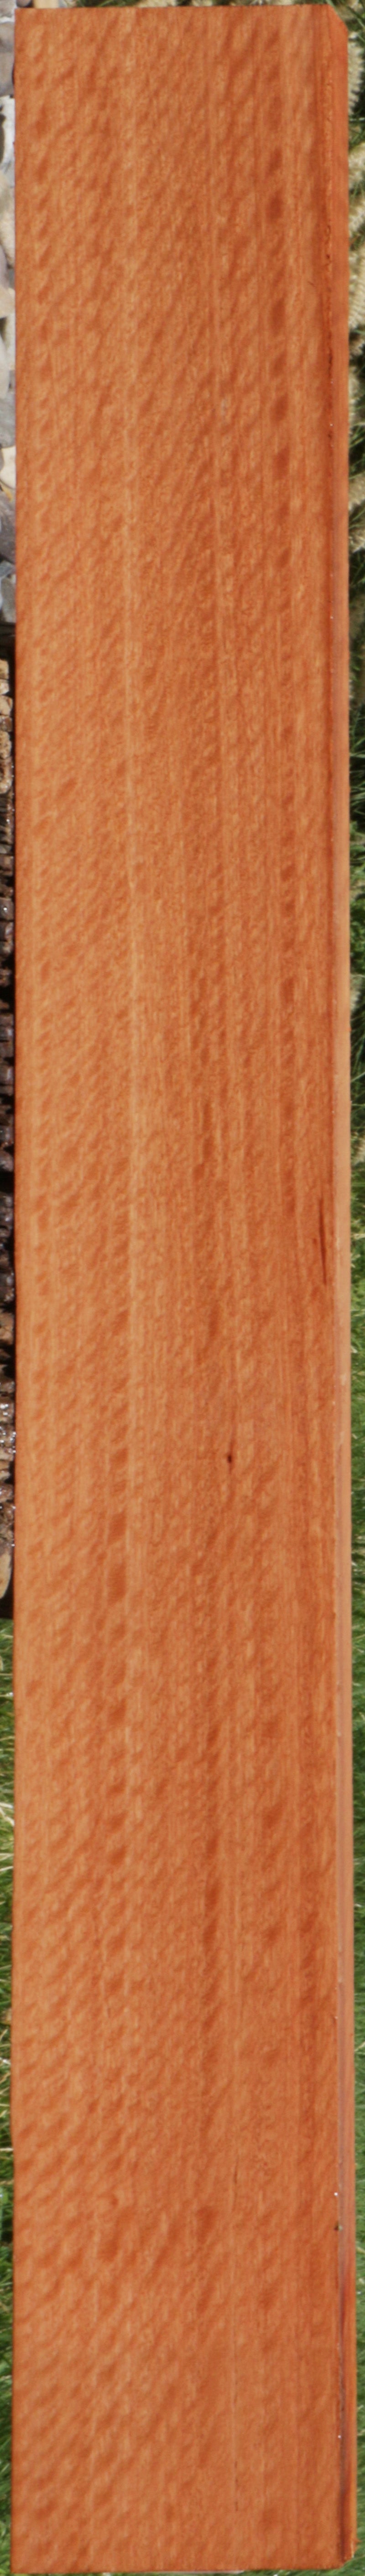 Quartersawn Extra Fancy Figured Red Gum Lumber